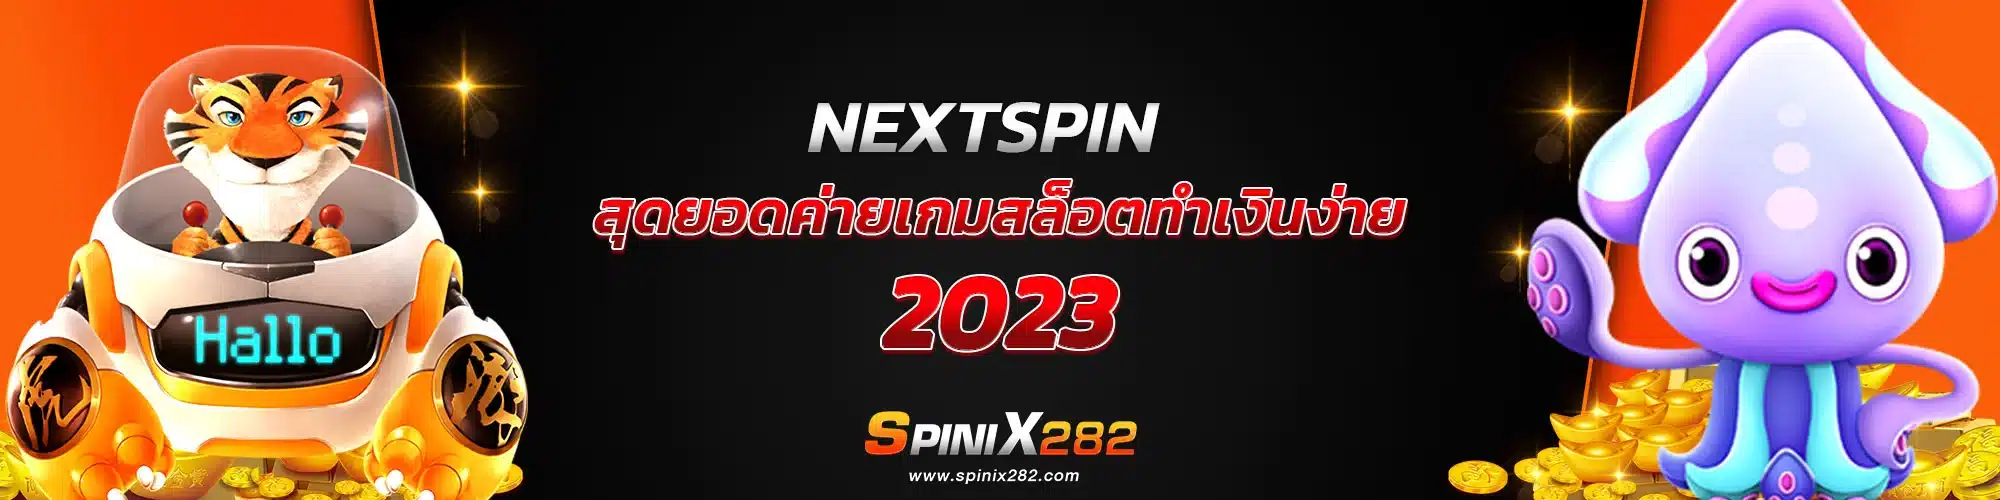 NEXTSPIN สุดยอดค่ายสล็อตทำเงิน 2023